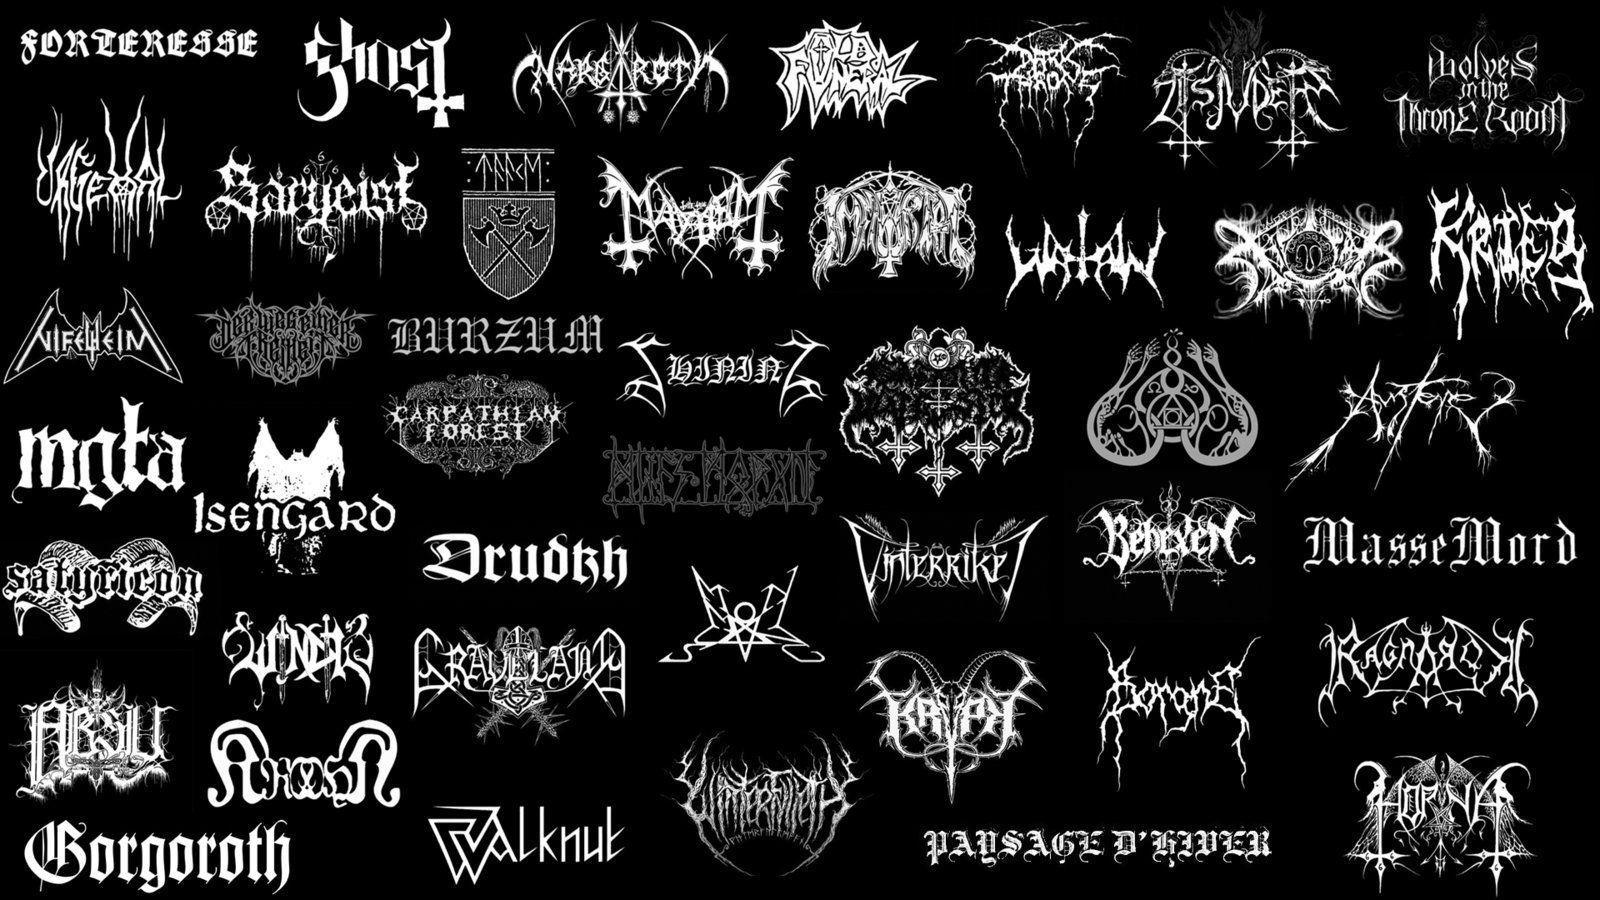 Black Metal Wallpaper Image & Picture